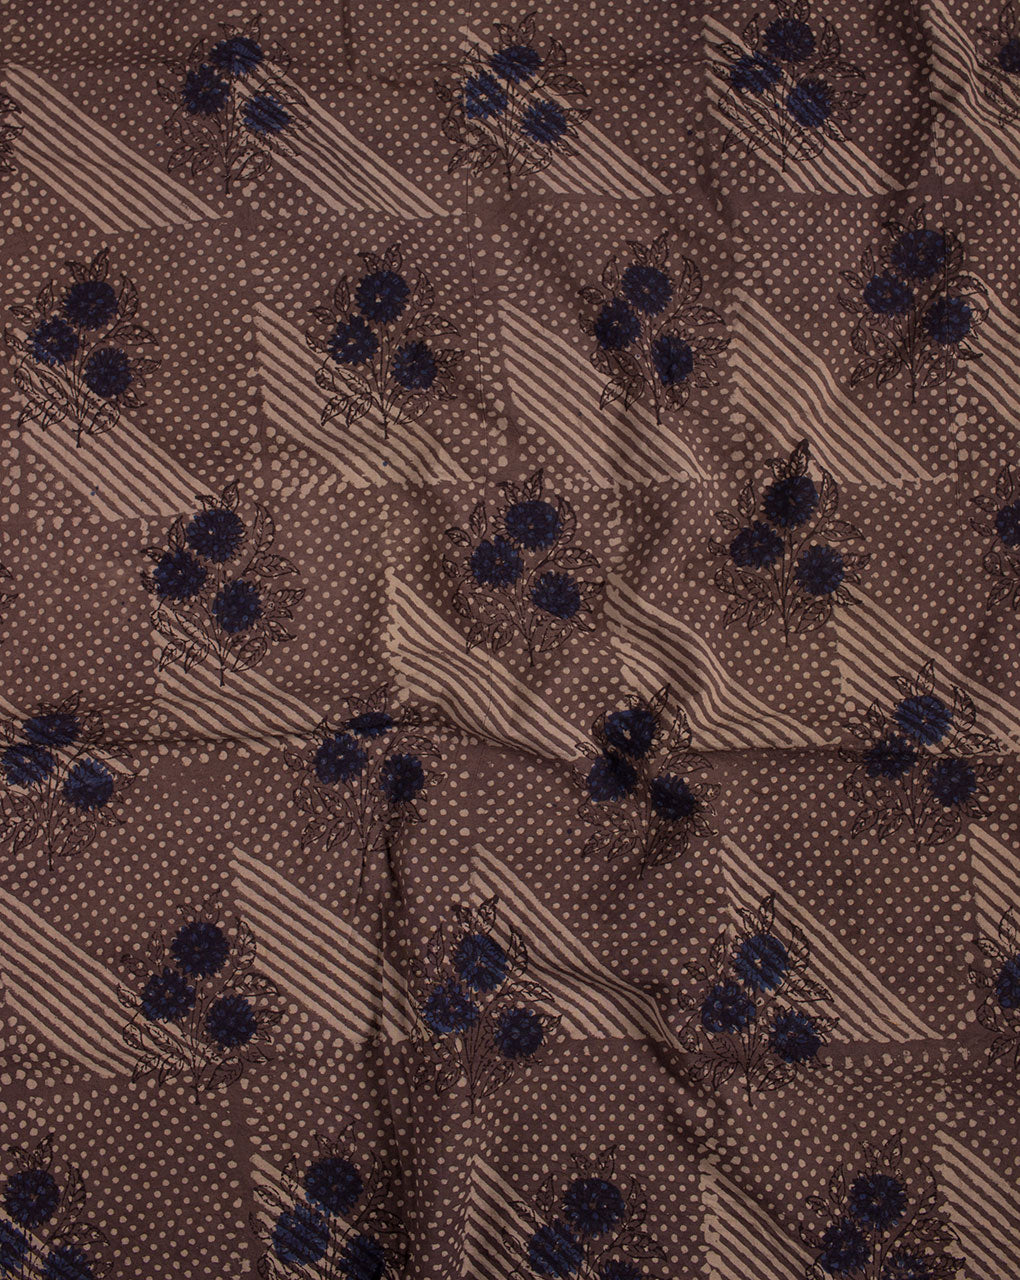 Jhag Ajrak Hand Block Natural Dye Cotton Fabric - Fabriclore.com